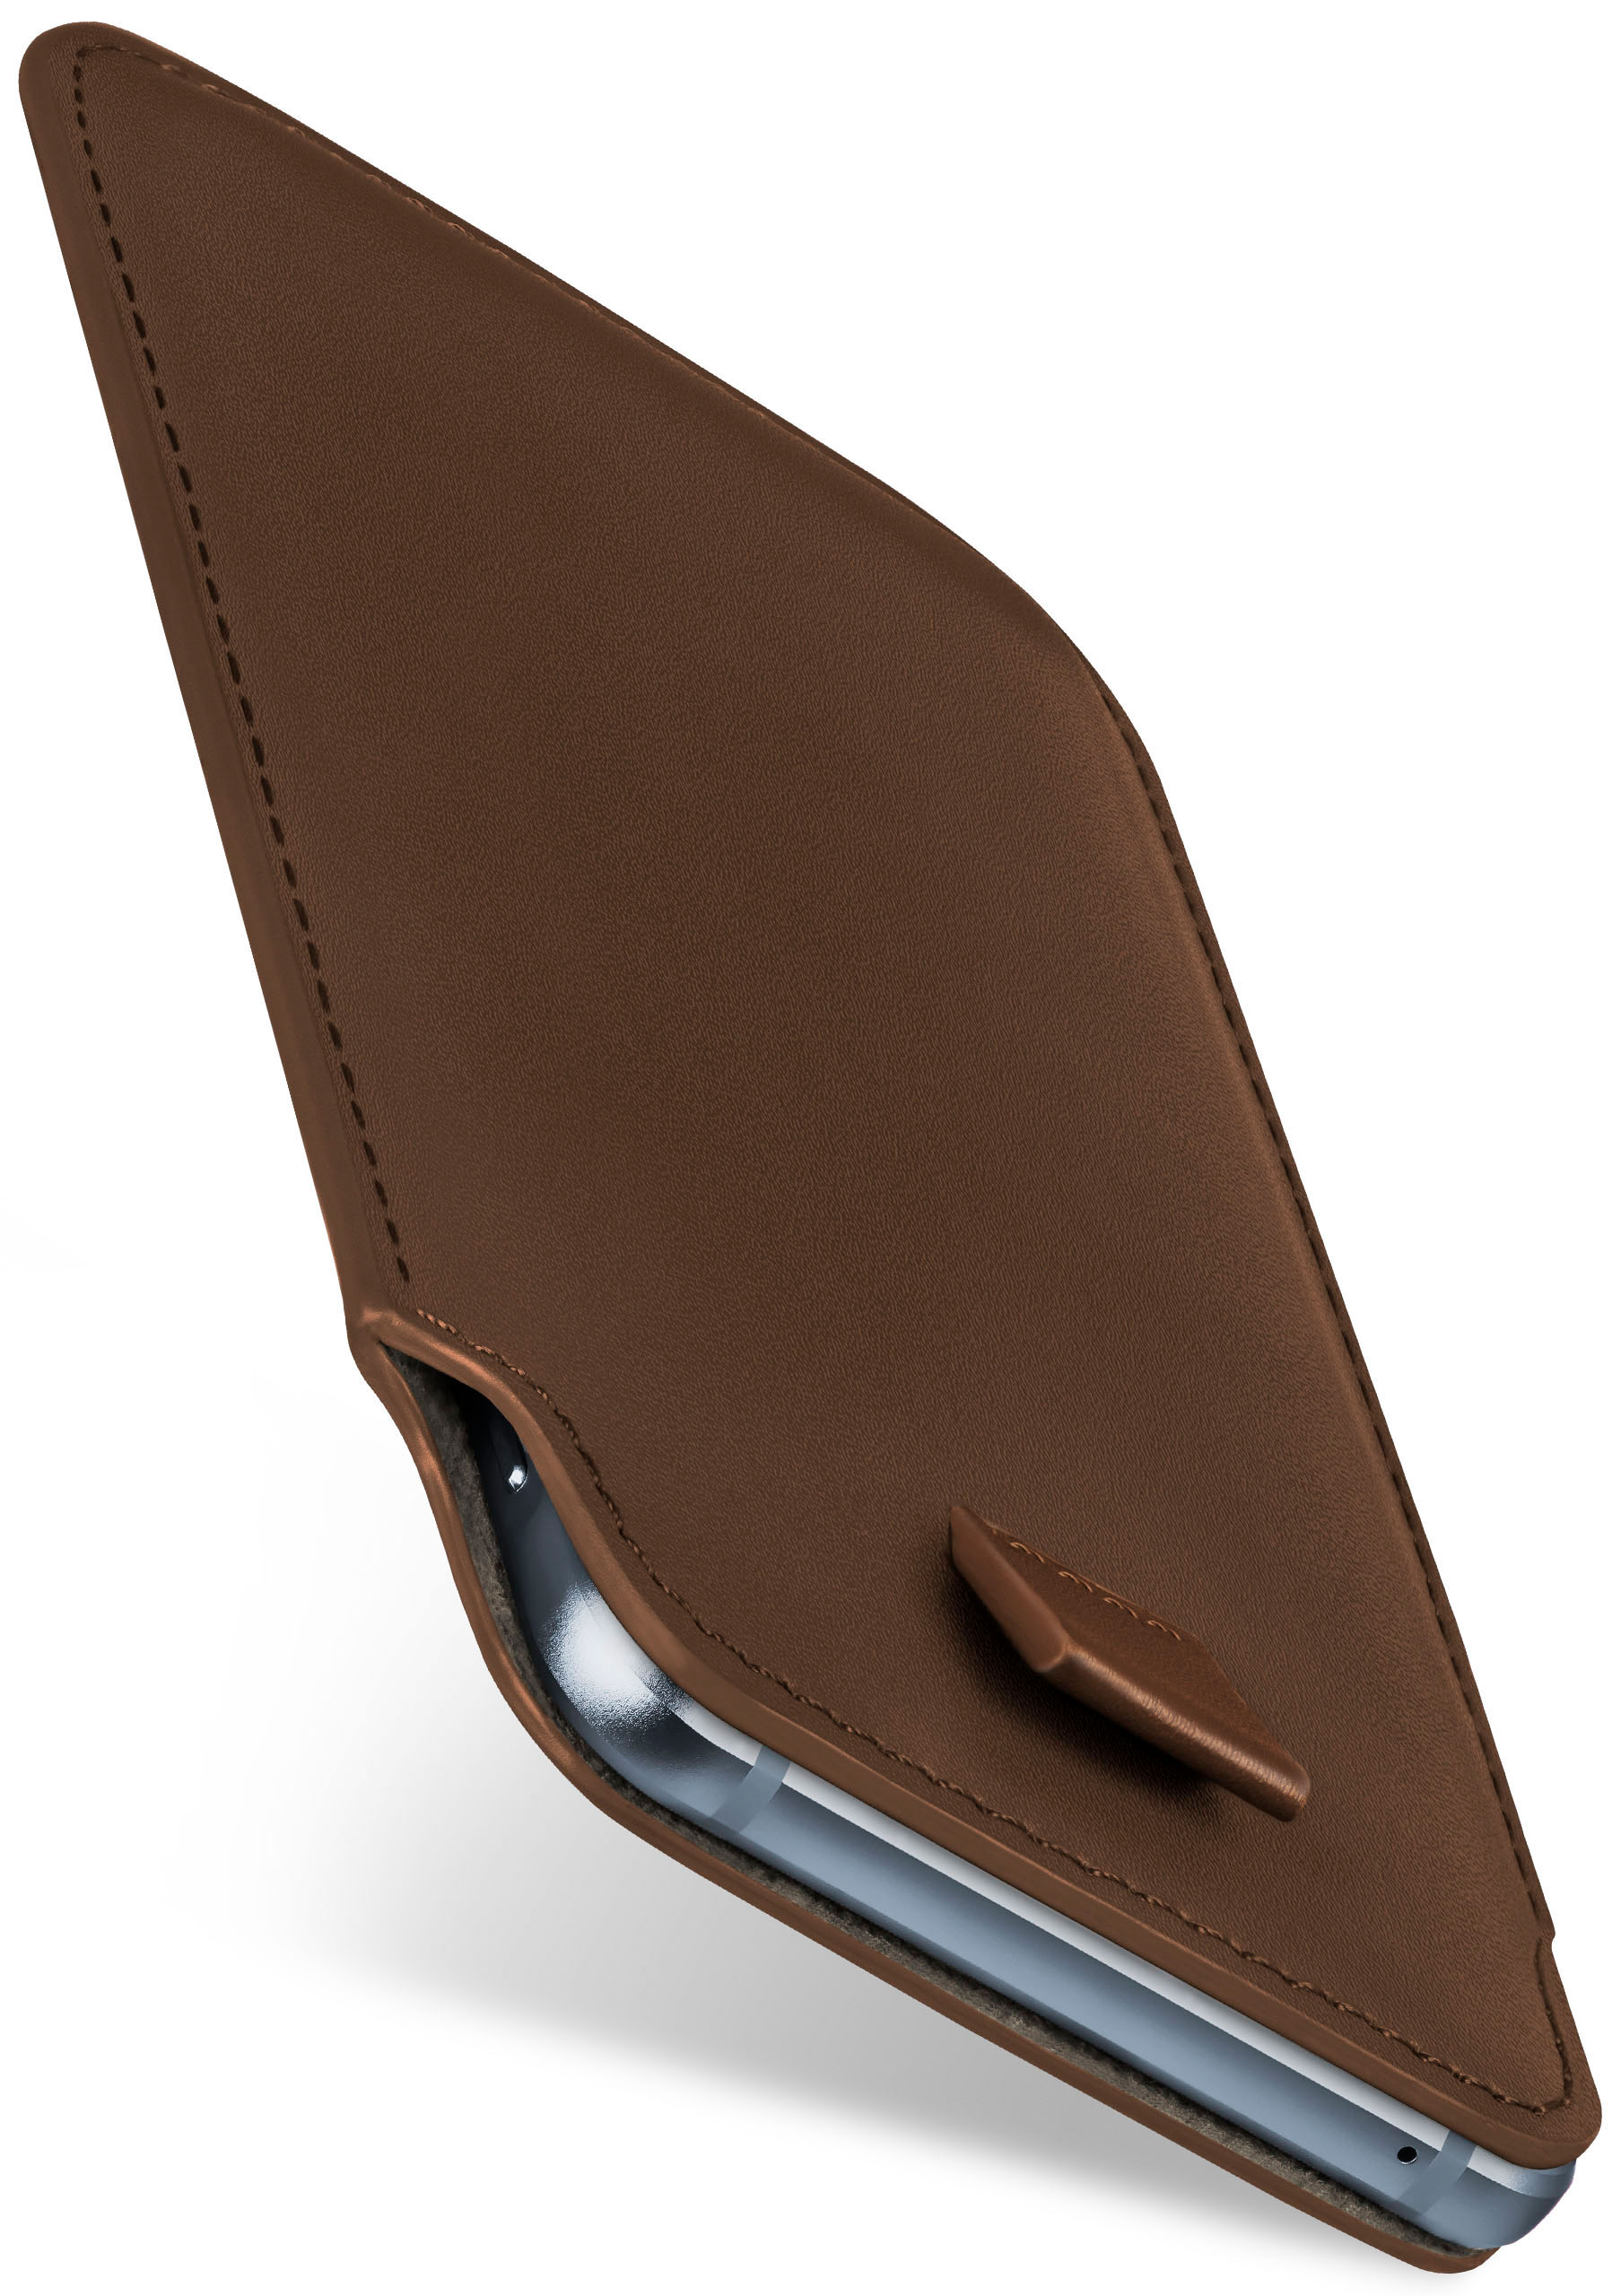 Oxide-Brown Slide Samsung, Folder, MOEX Cover, Full Case, Galaxy